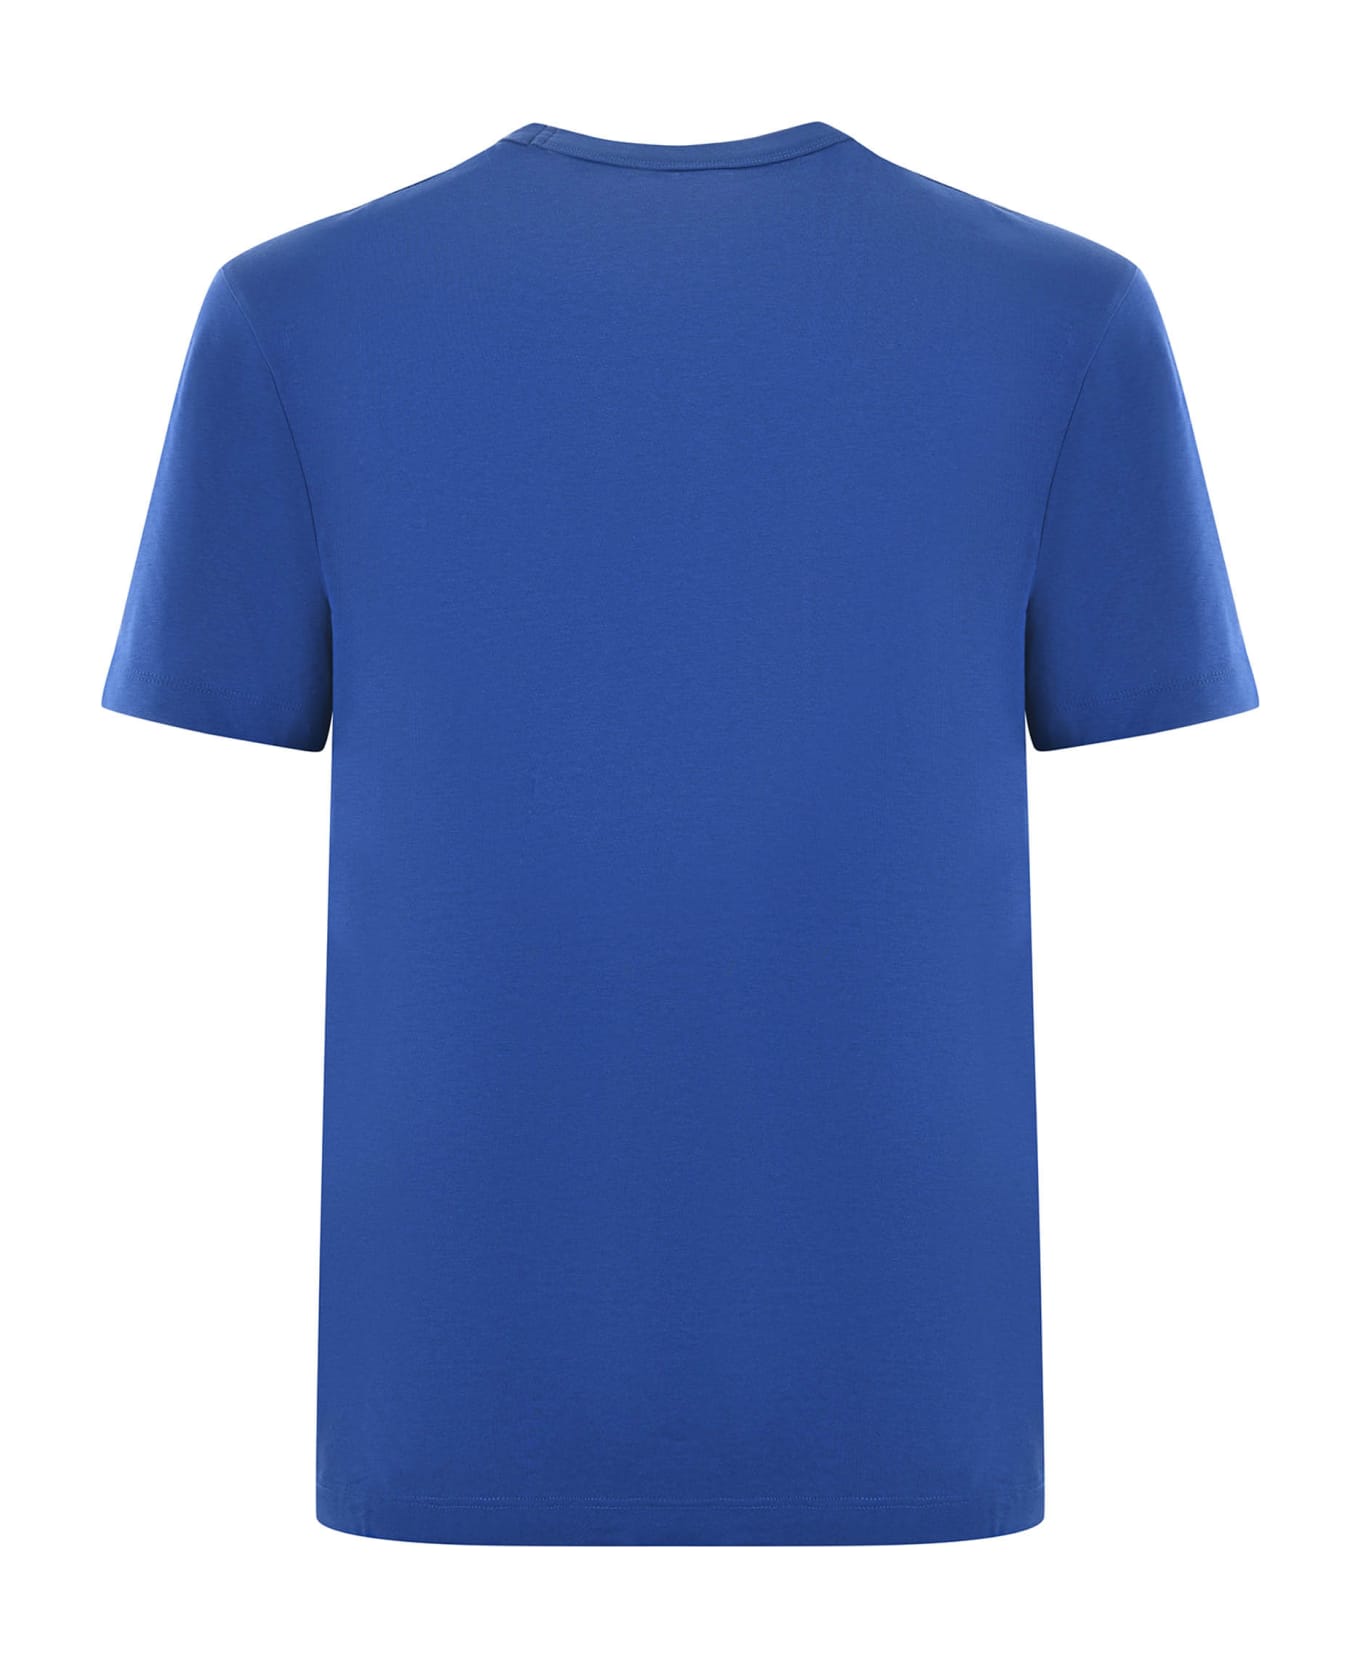 Blauer T-shirt - Blu cobalto シャツ